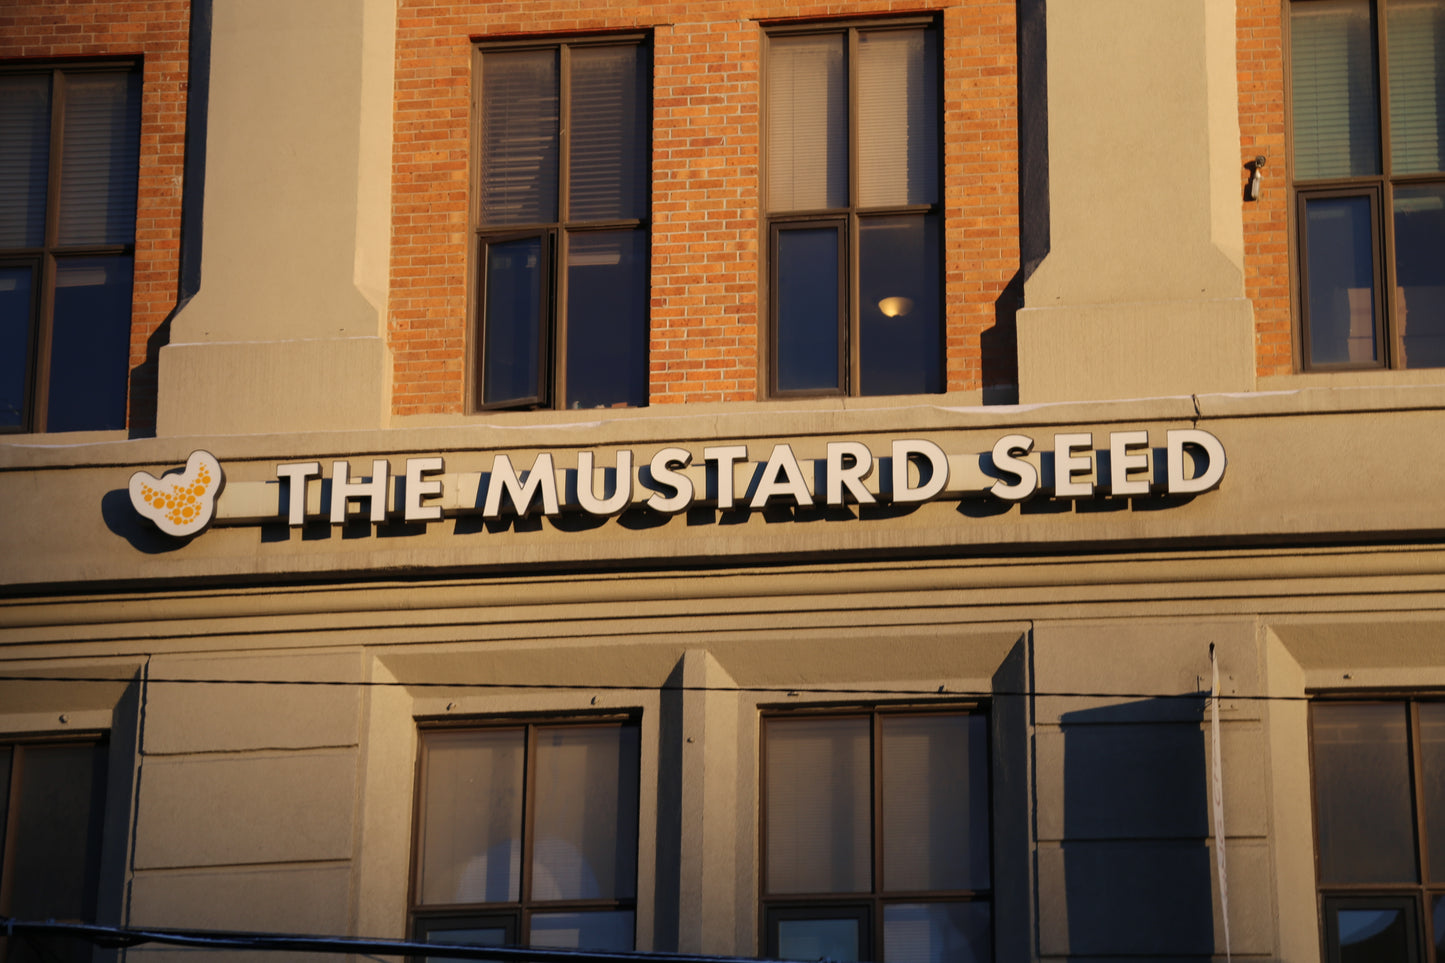 Mustard Seed Trucker Hat Collaboration